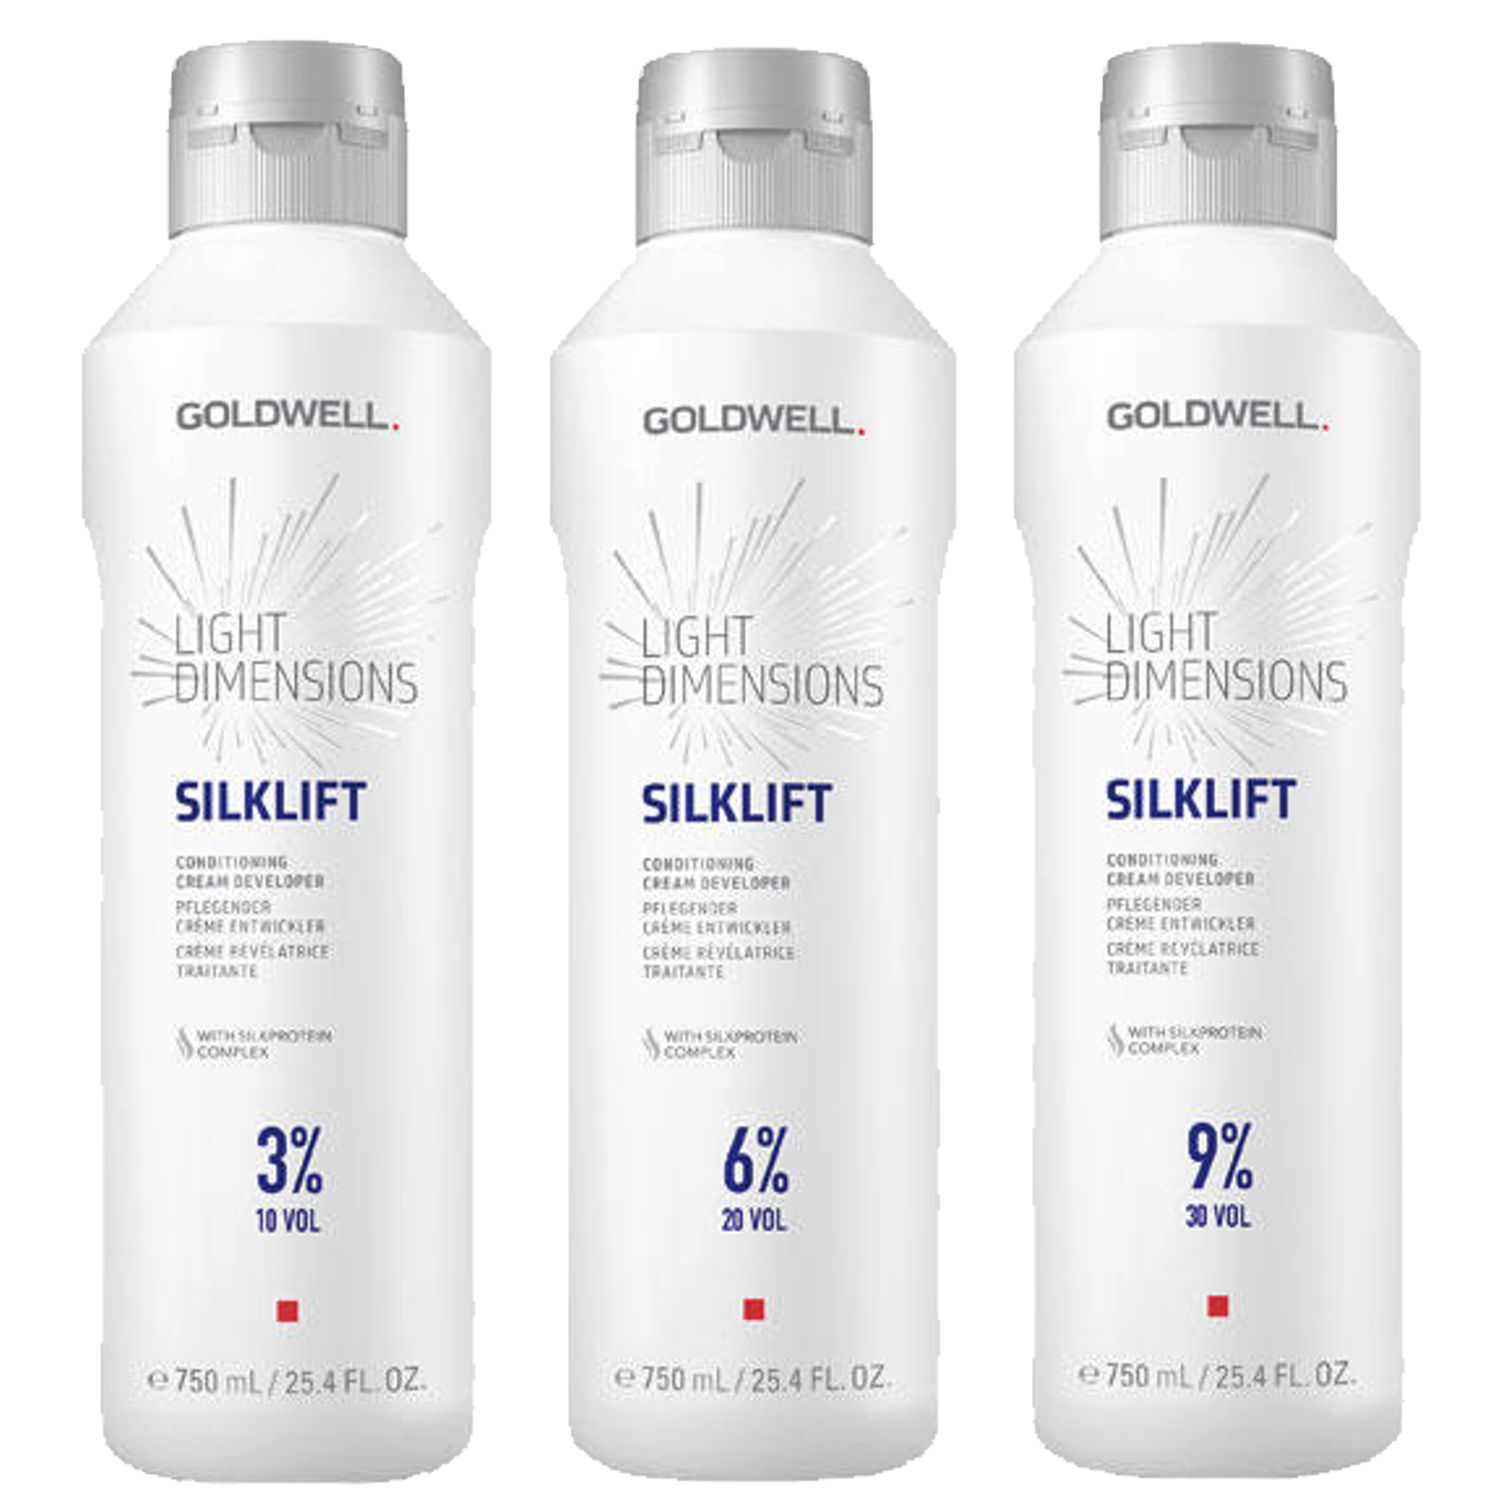 GOLDWELL Light Dimensions Silklift Conditioning Cream Developer 750 ml